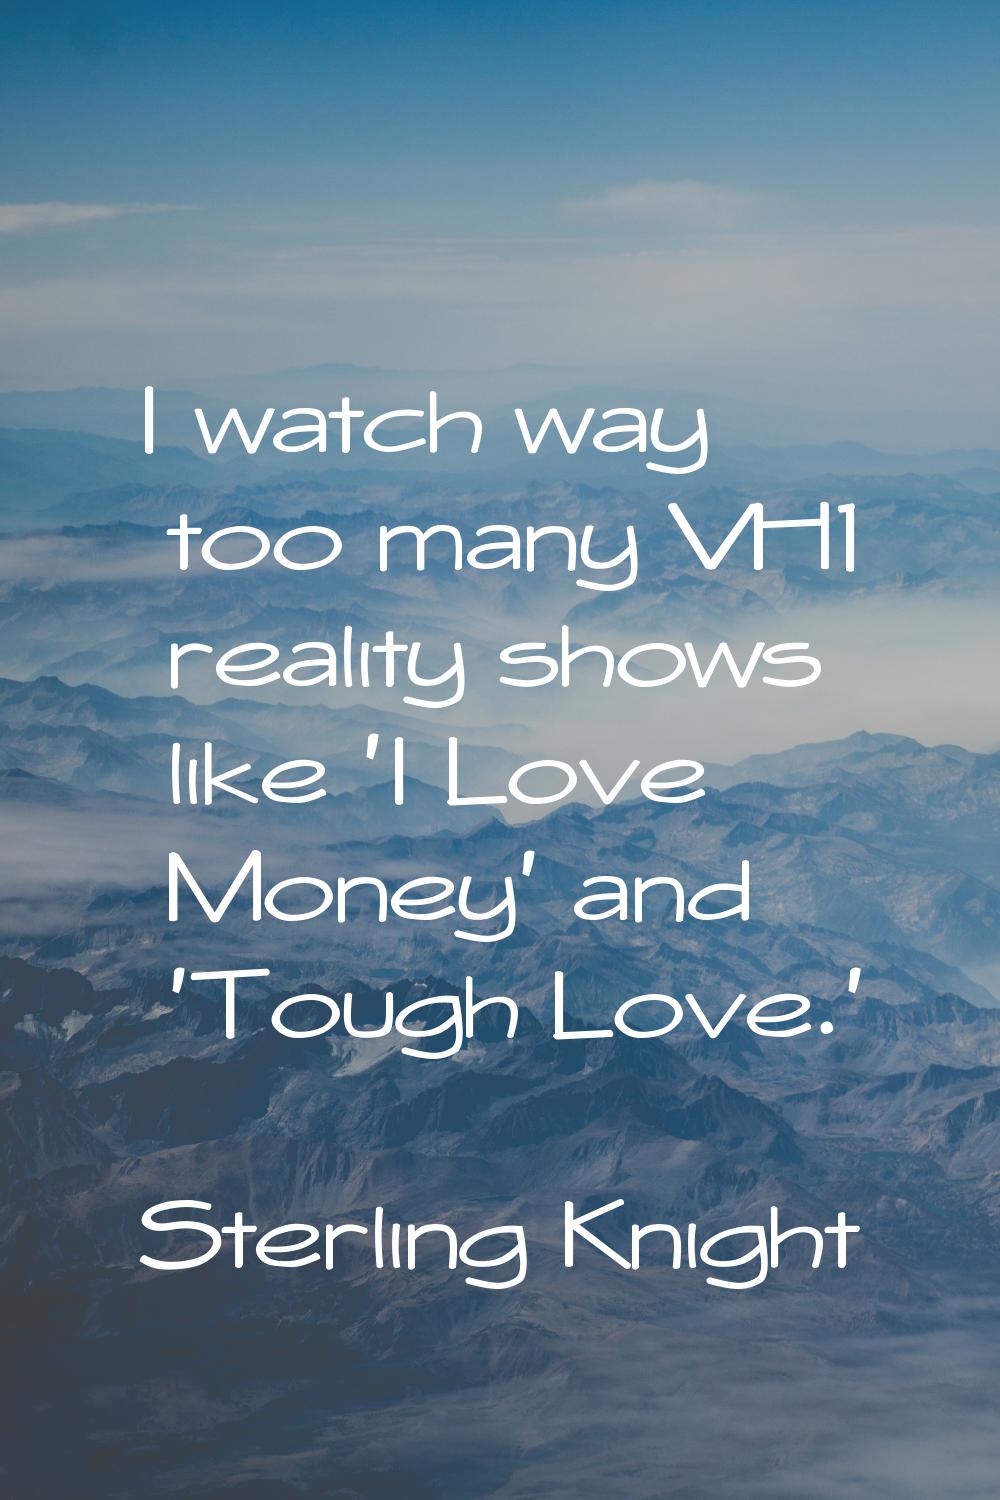 I watch way too many VH1 reality shows like 'I Love Money' and 'Tough Love.'